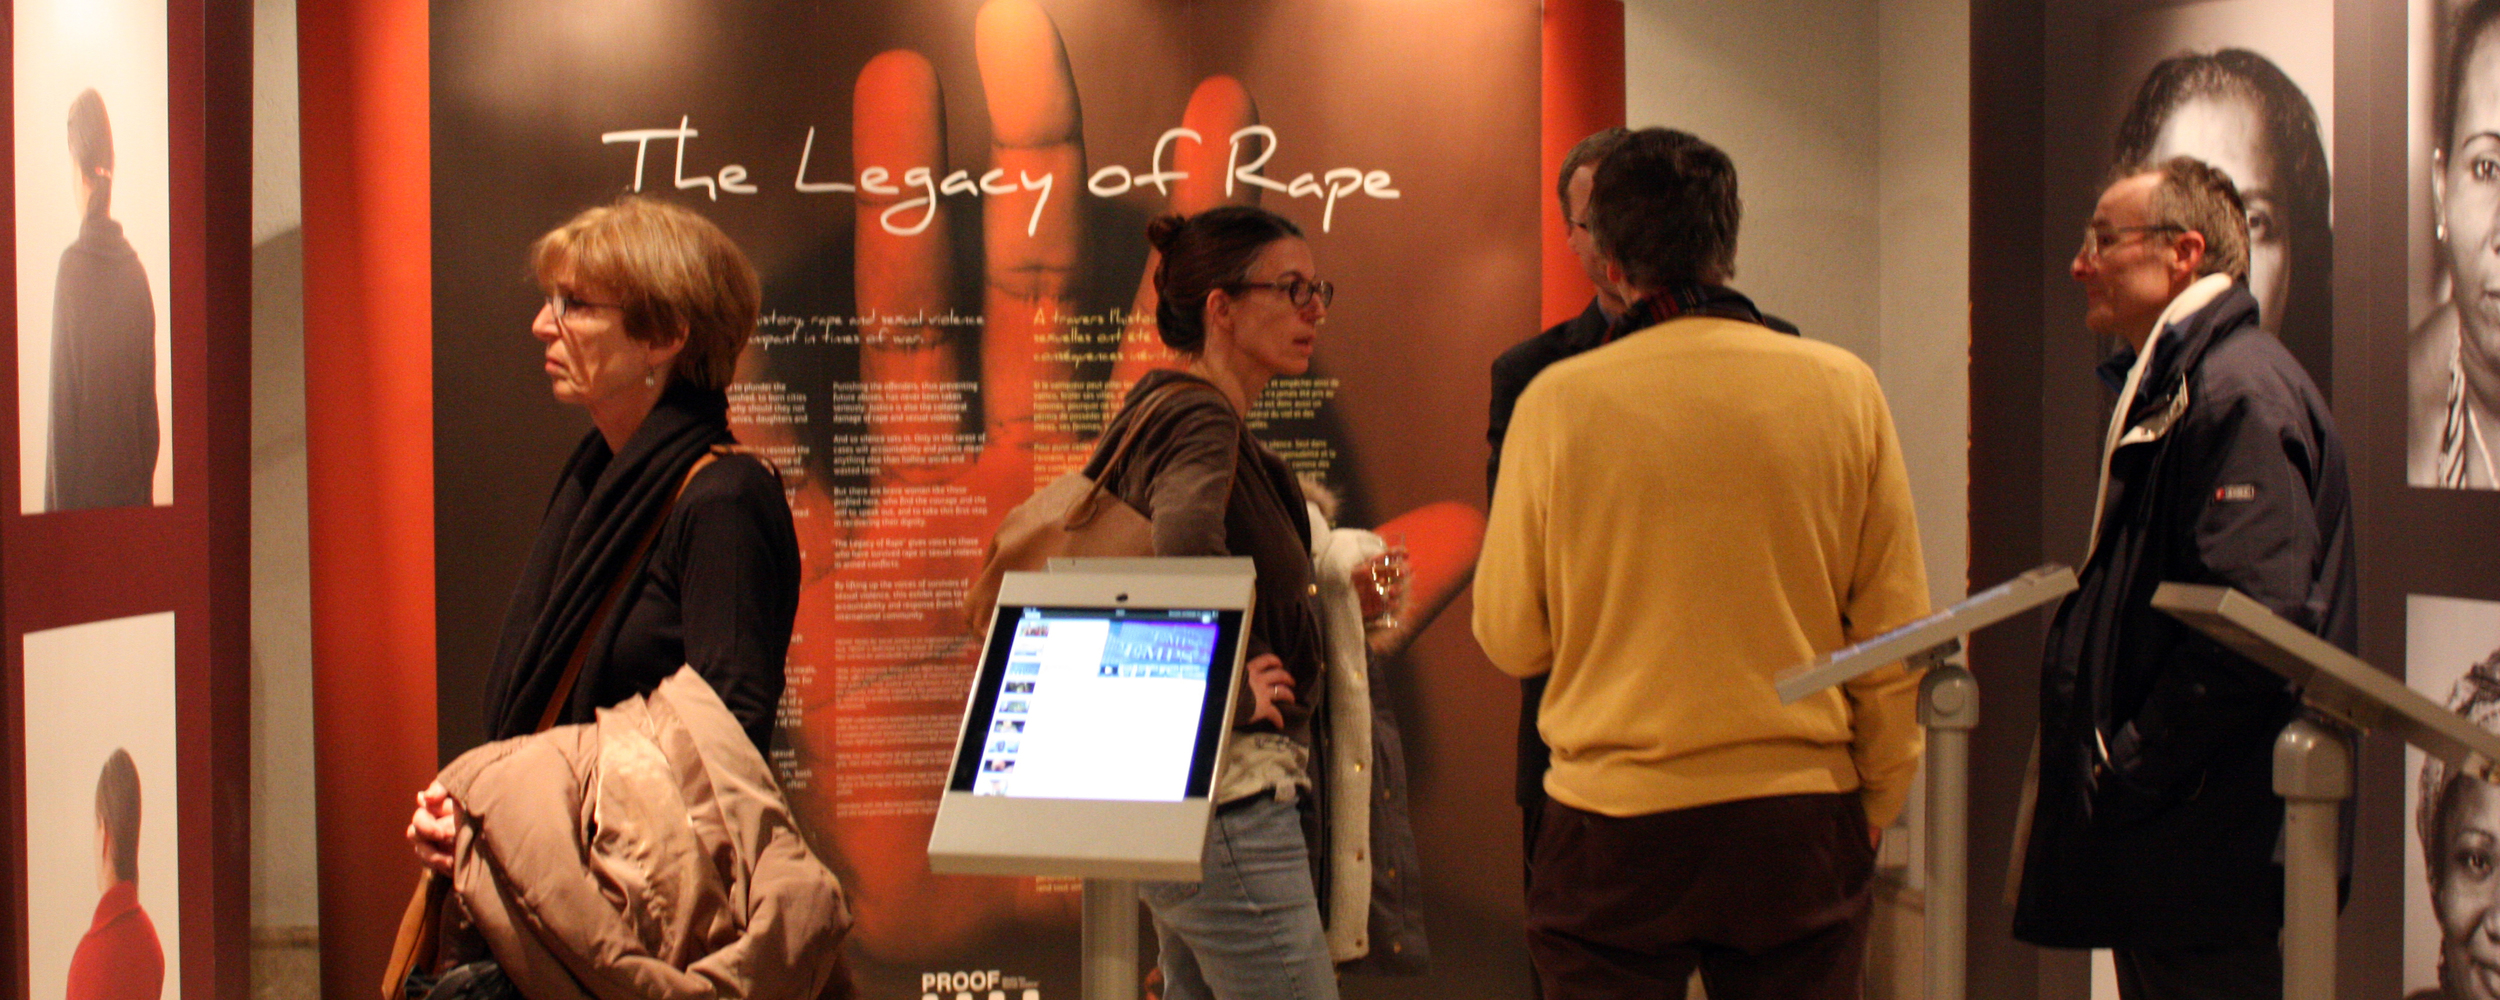 "The Legacy of Rape" exhibit in Geneva